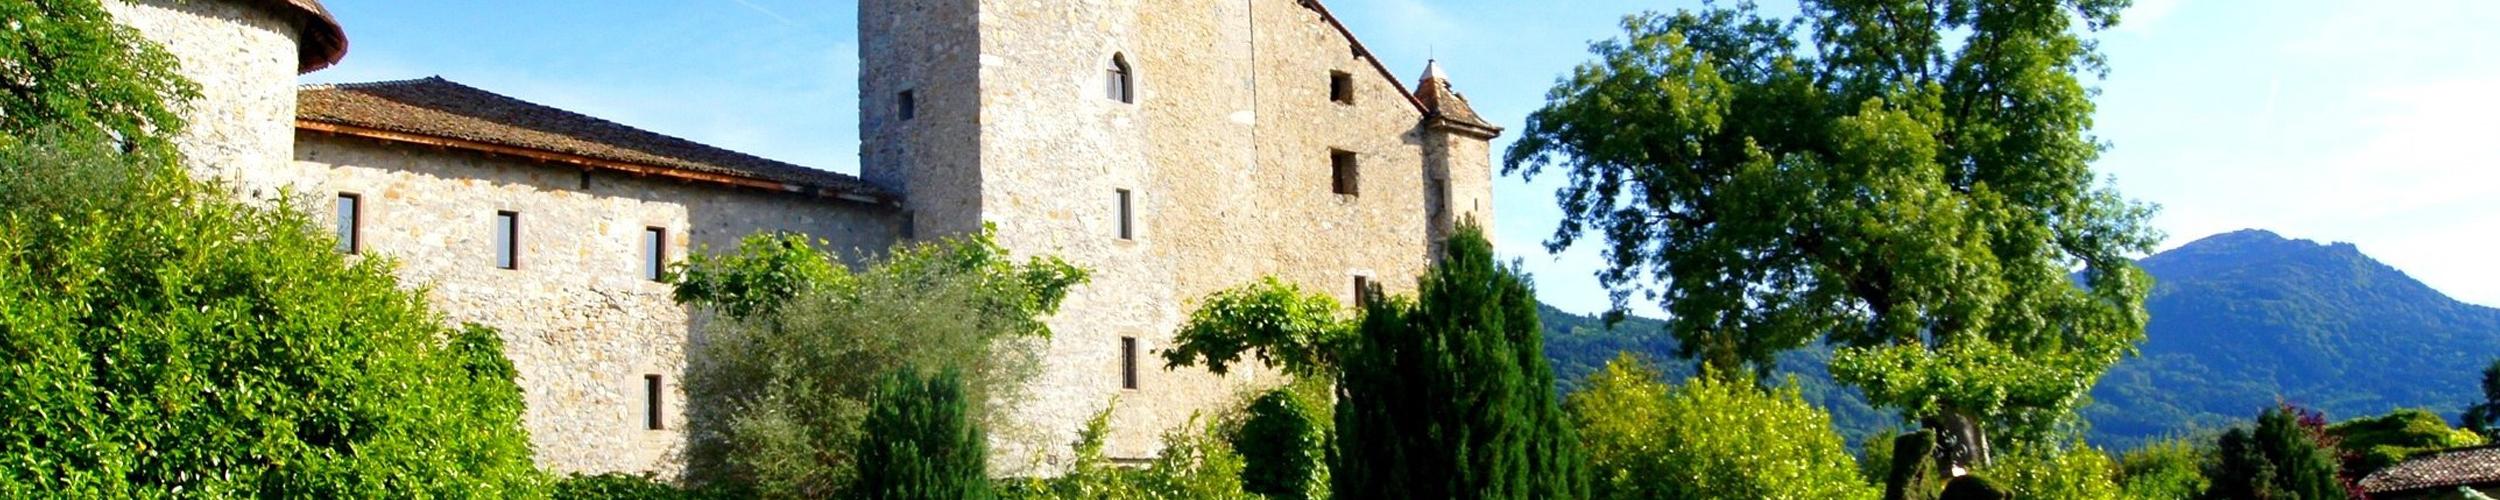 Château d'Avully, Brenthonne